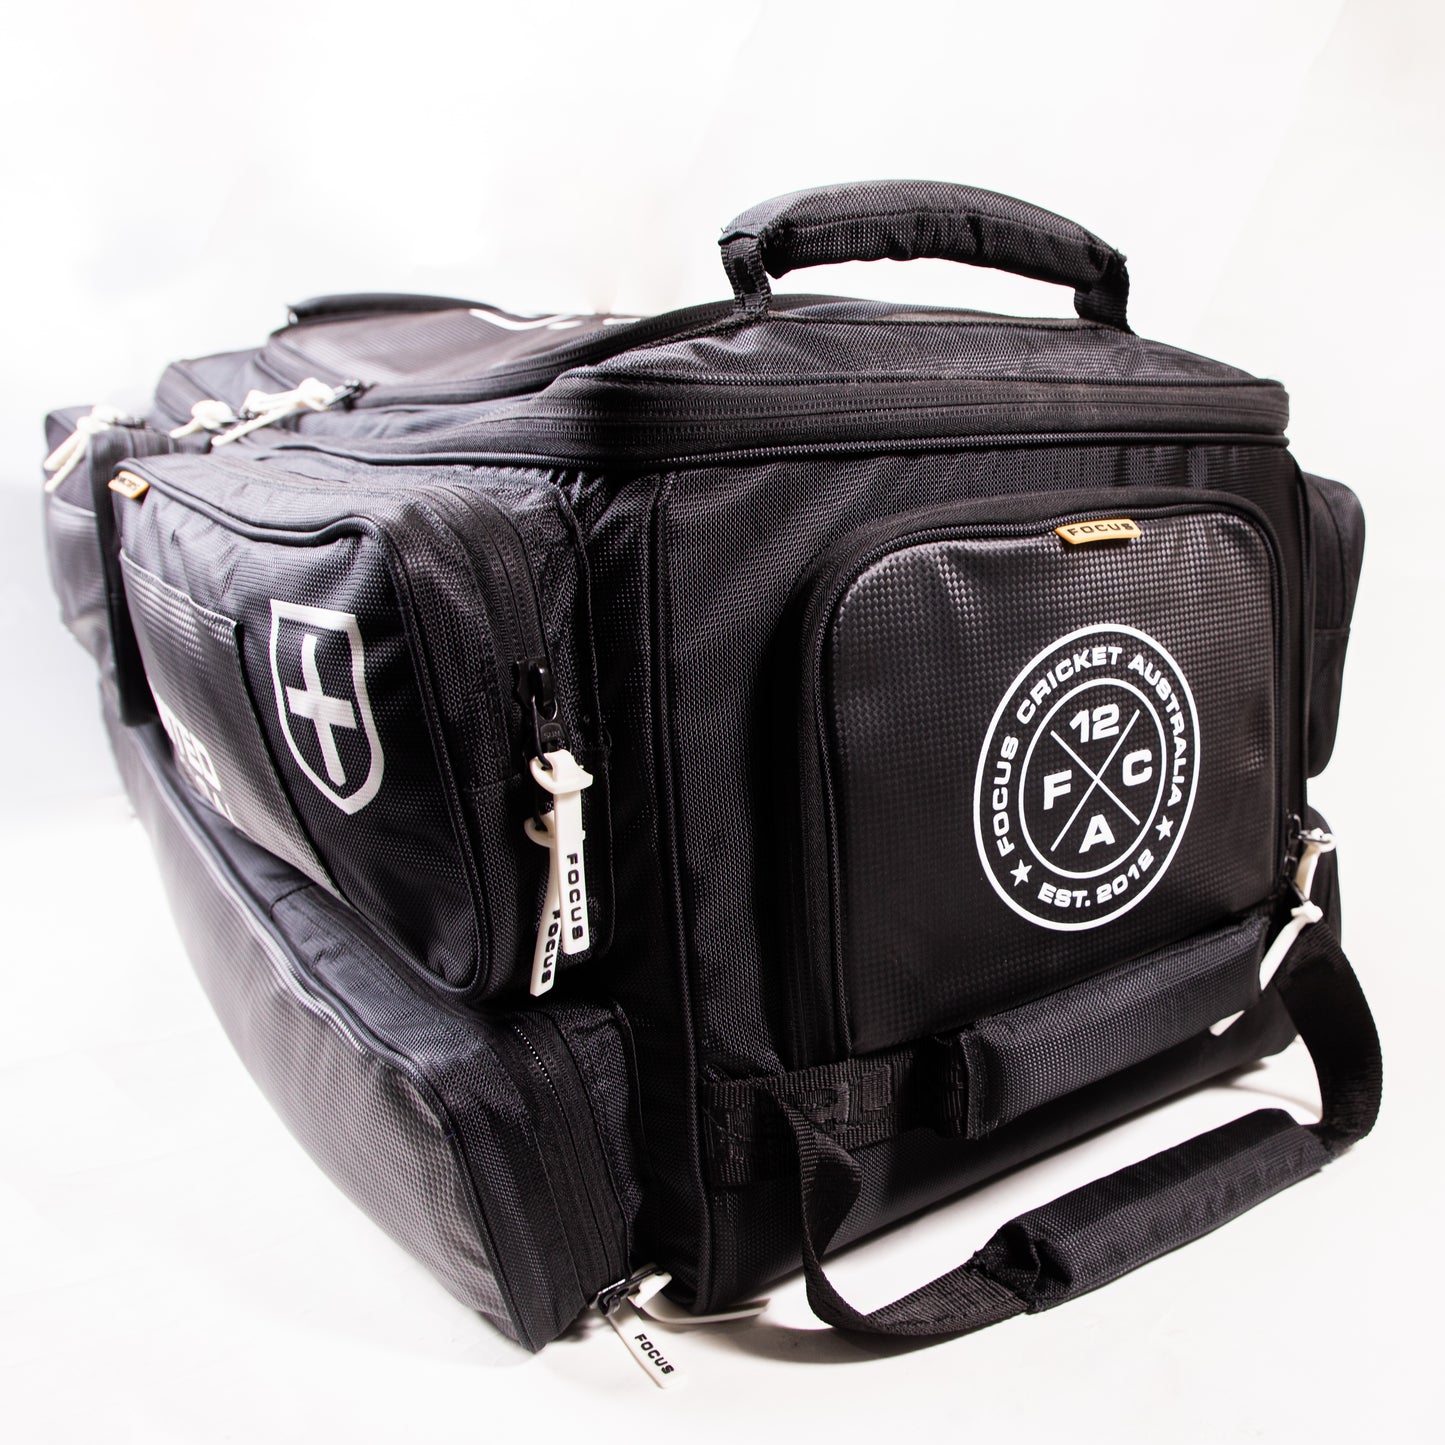 LIMITED Edition Tri Wheelie Bag - Black